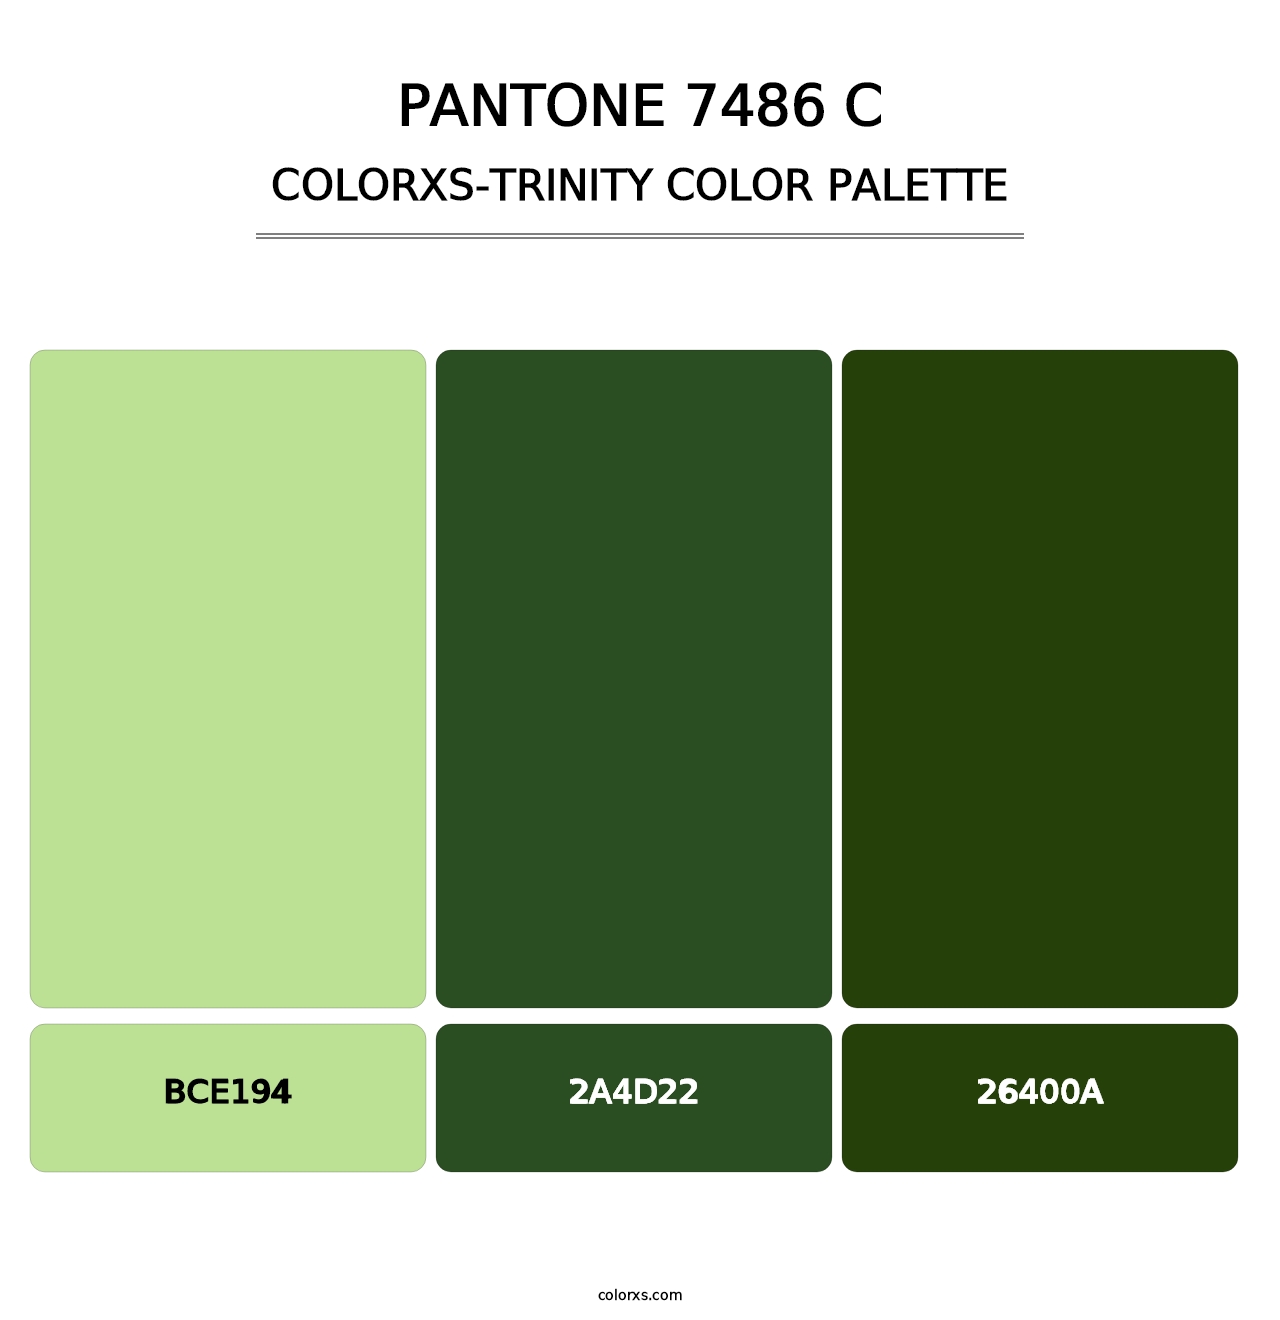 PANTONE 7486 C - Colorxs Trinity Palette